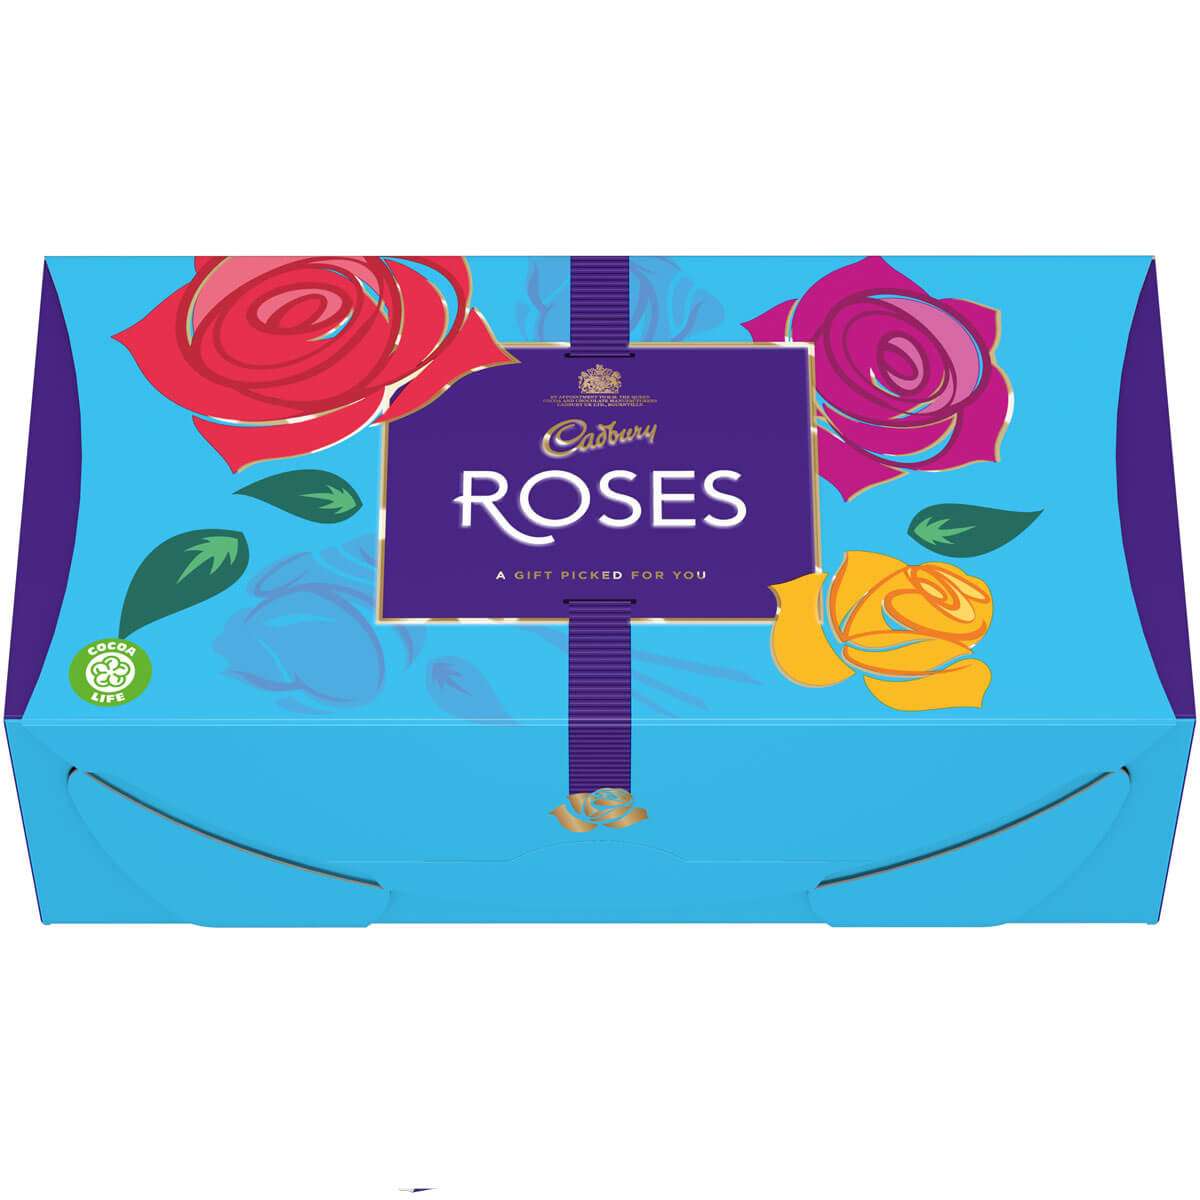 Cadbury Roses Chocolate Gift Carton 275g RRP £5 CLEARANCE XL £3